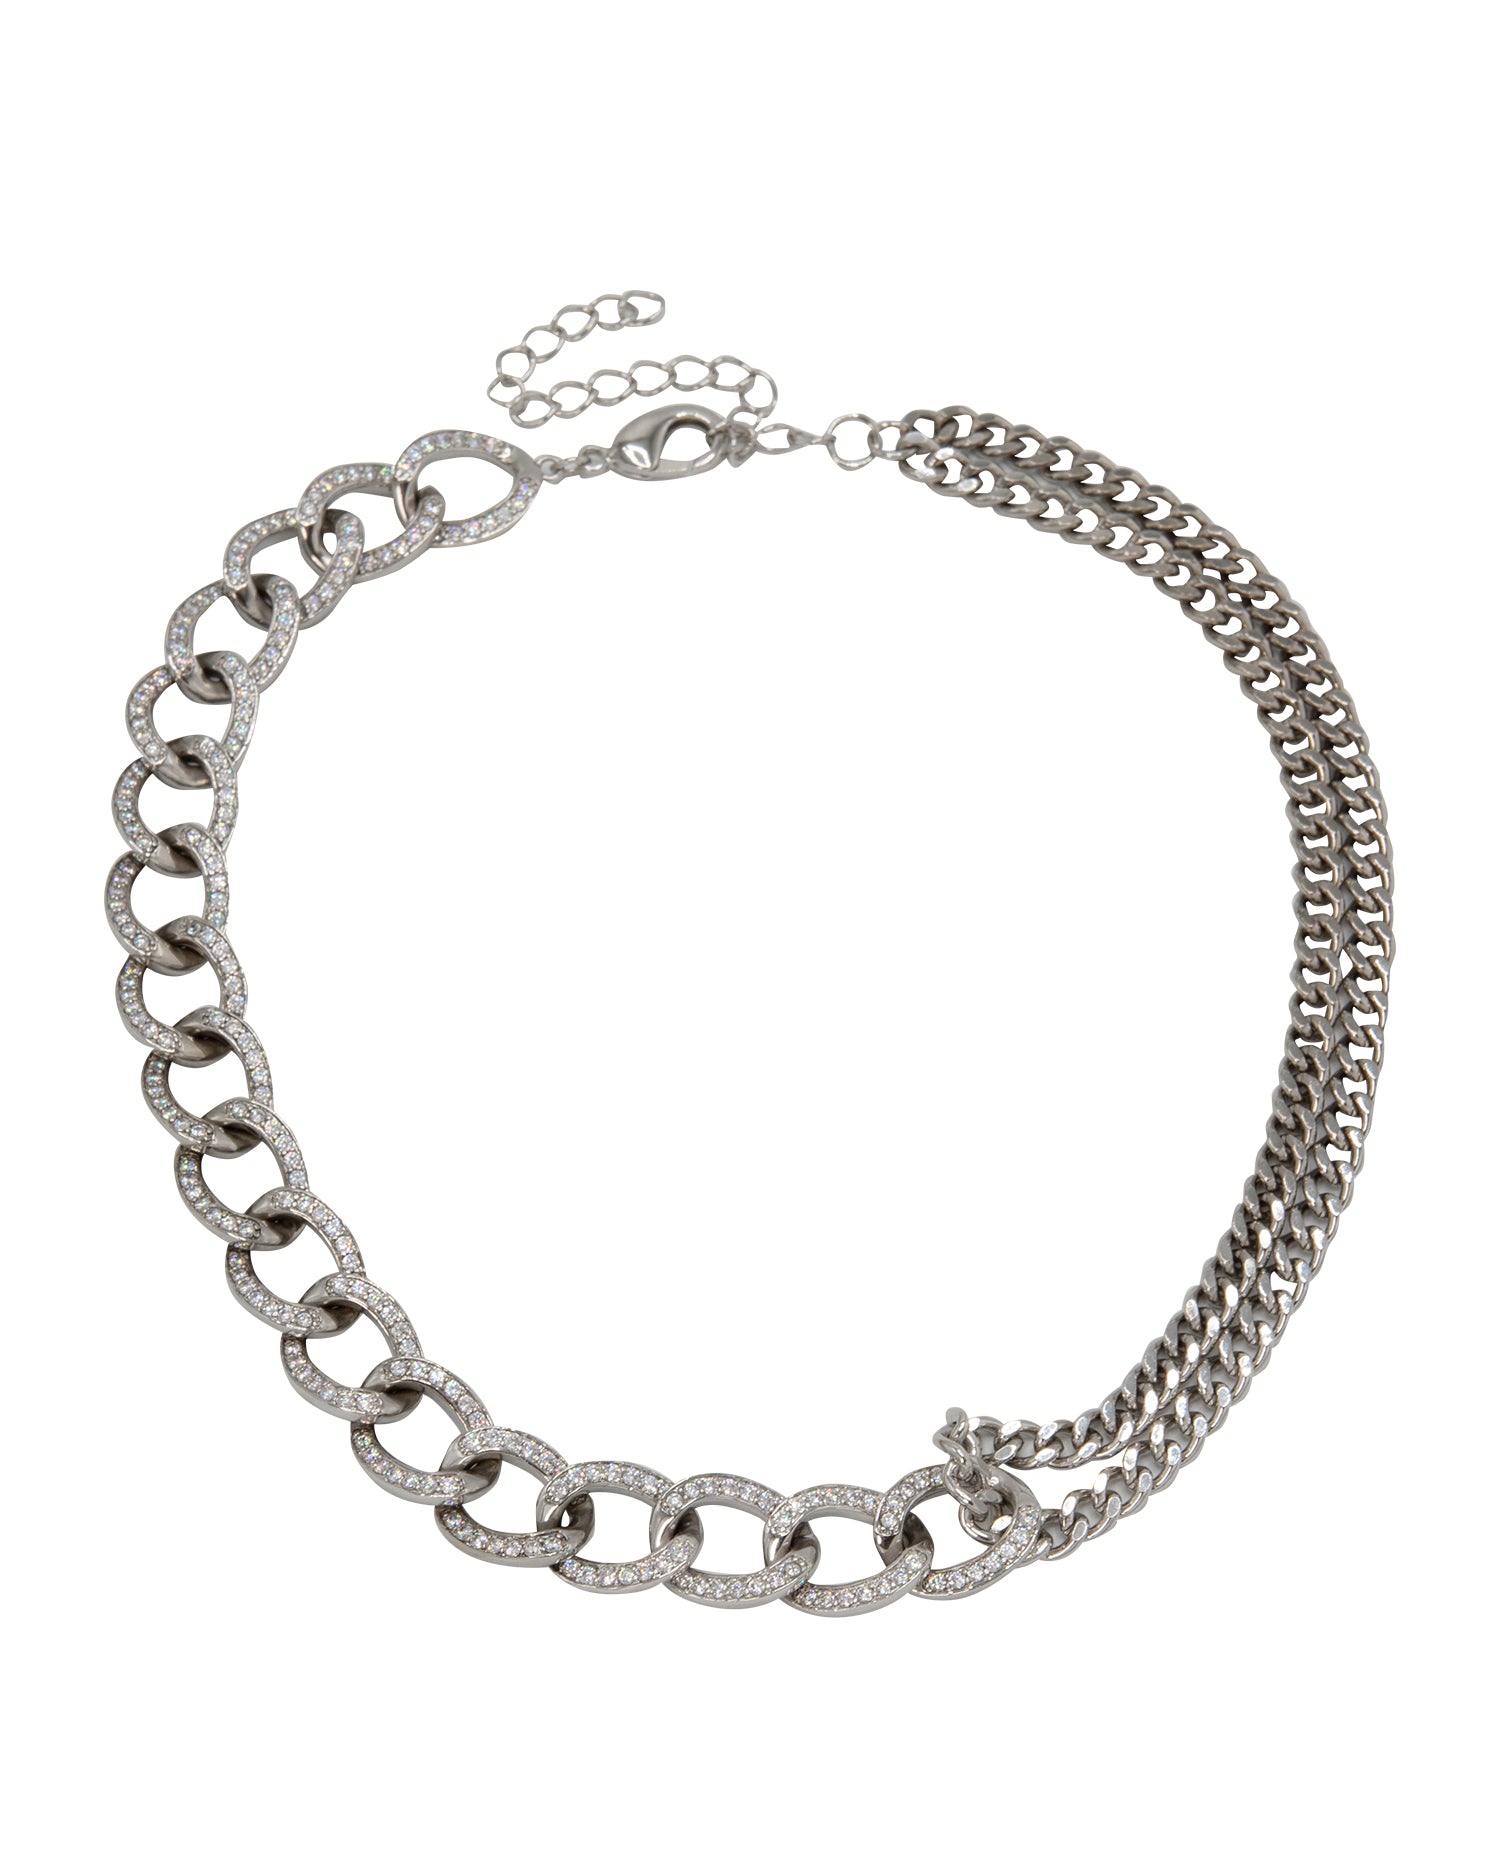 Interlocking Double Chain Necklace